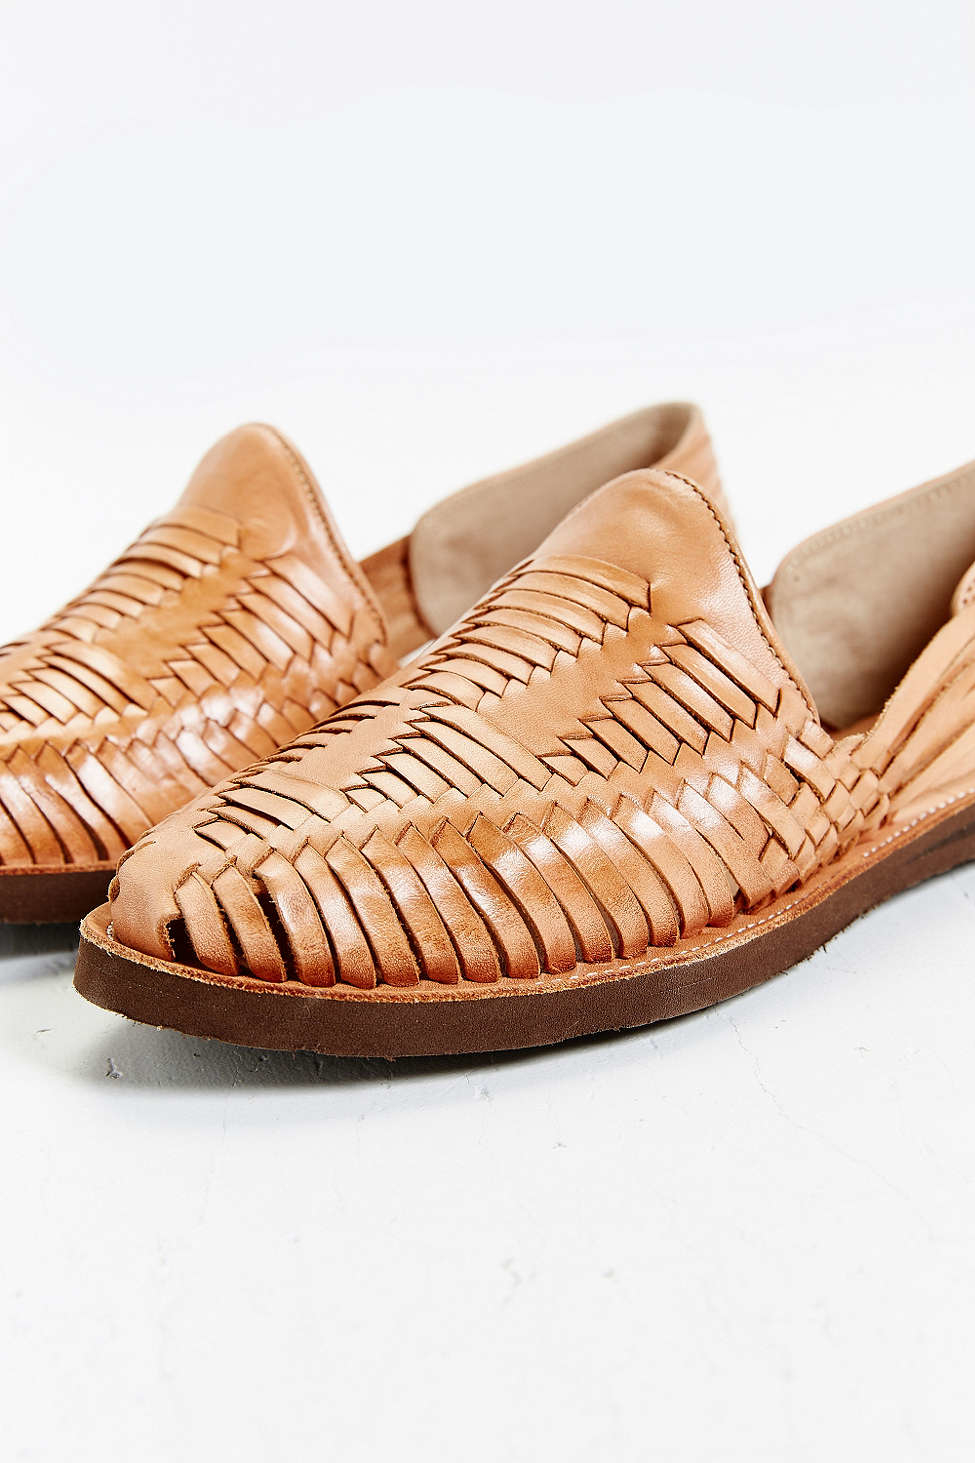 Lyst - Yuketen Chamula Huarache Woven Leather Shoe in Natural for Men